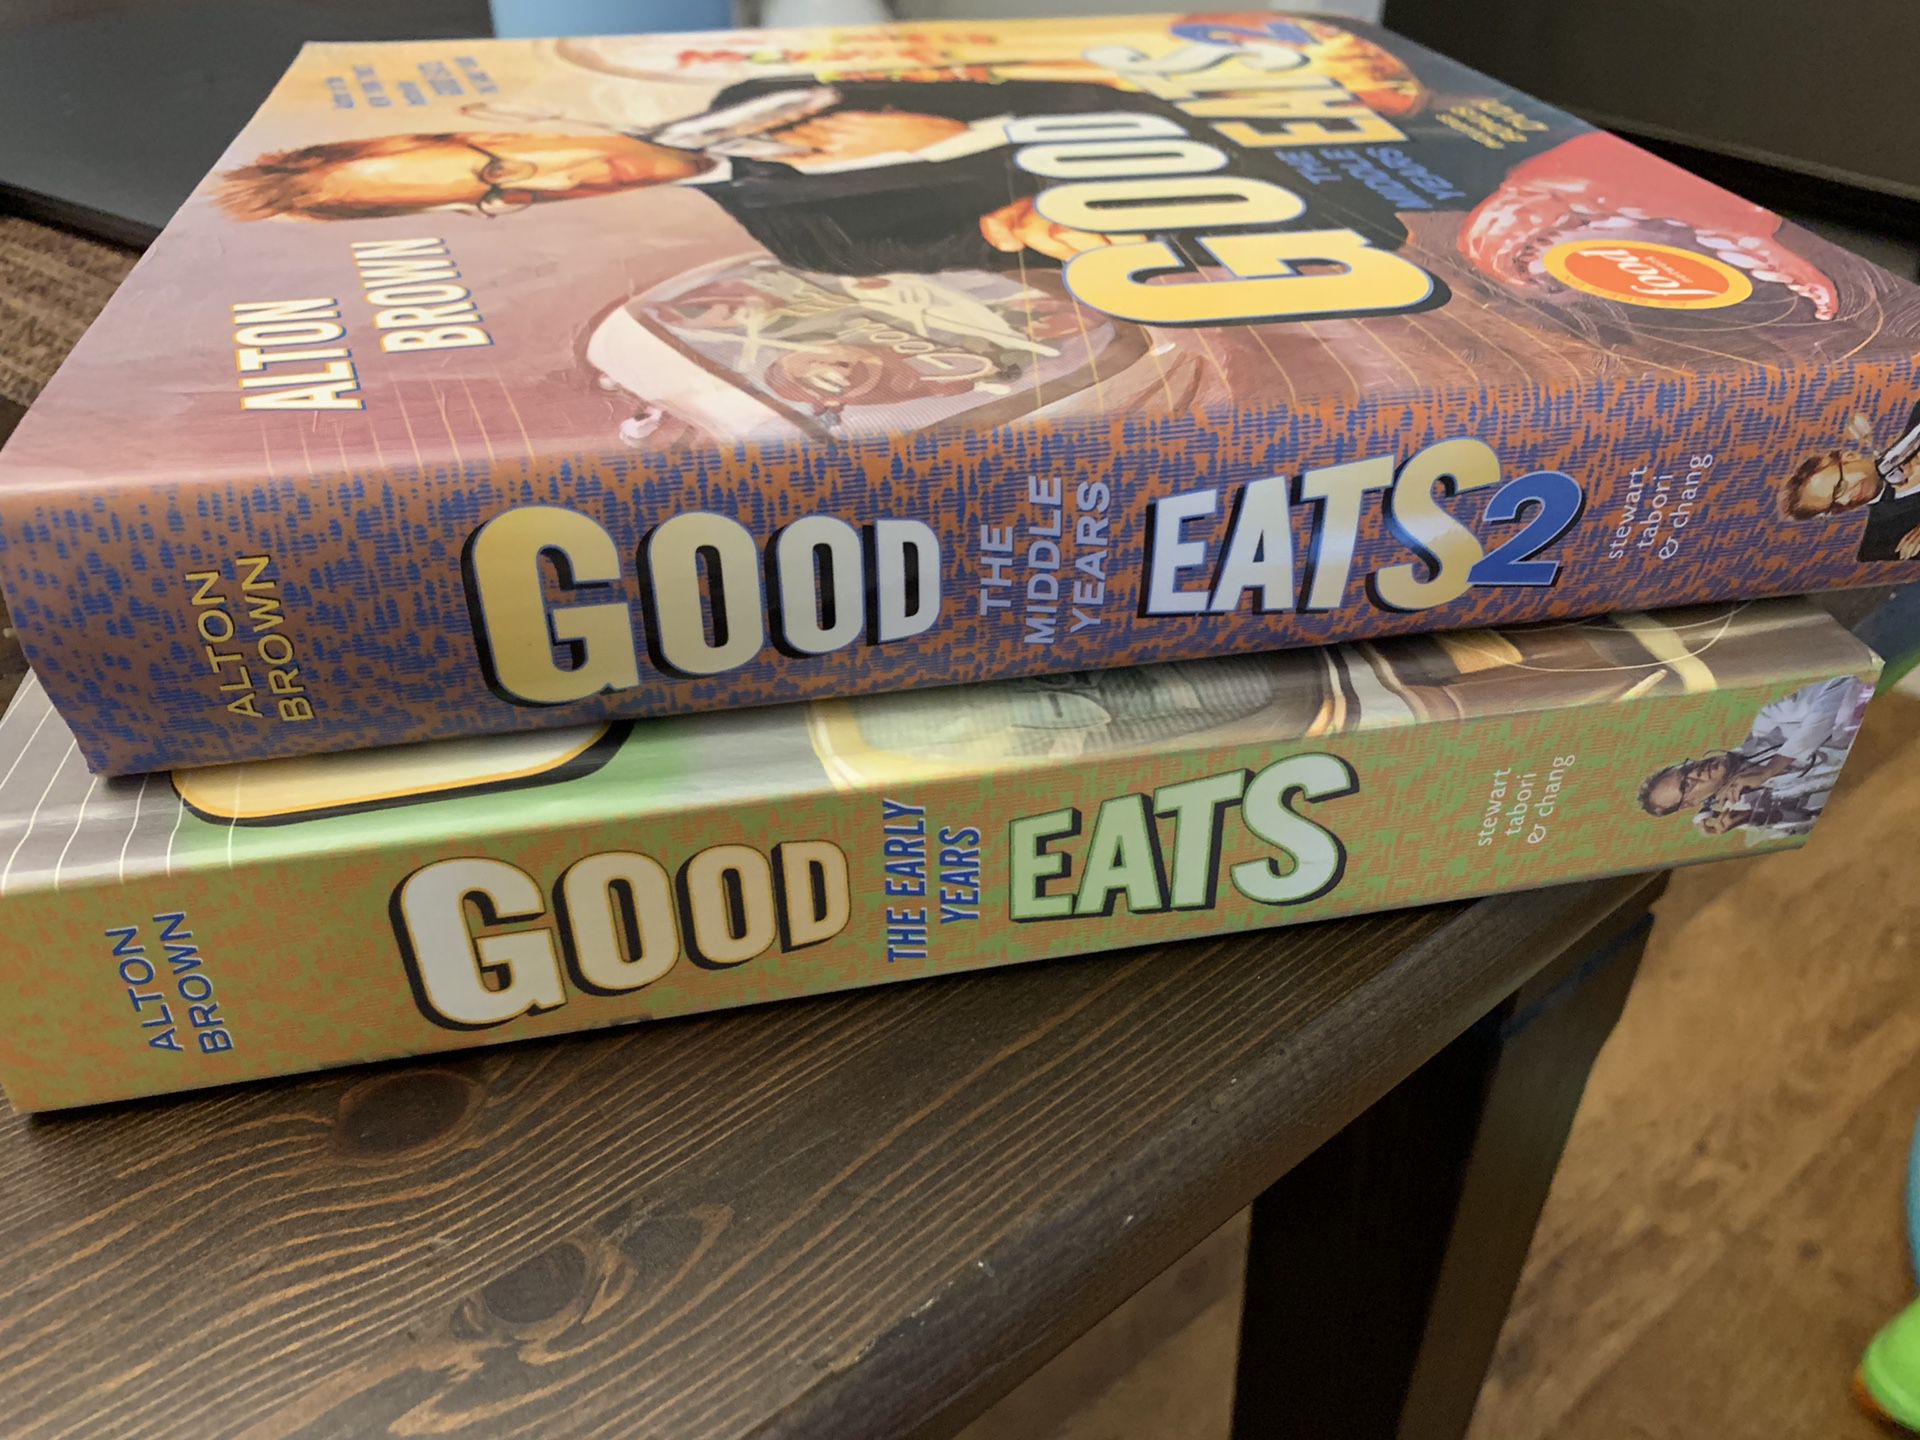 Good eats food network cook books